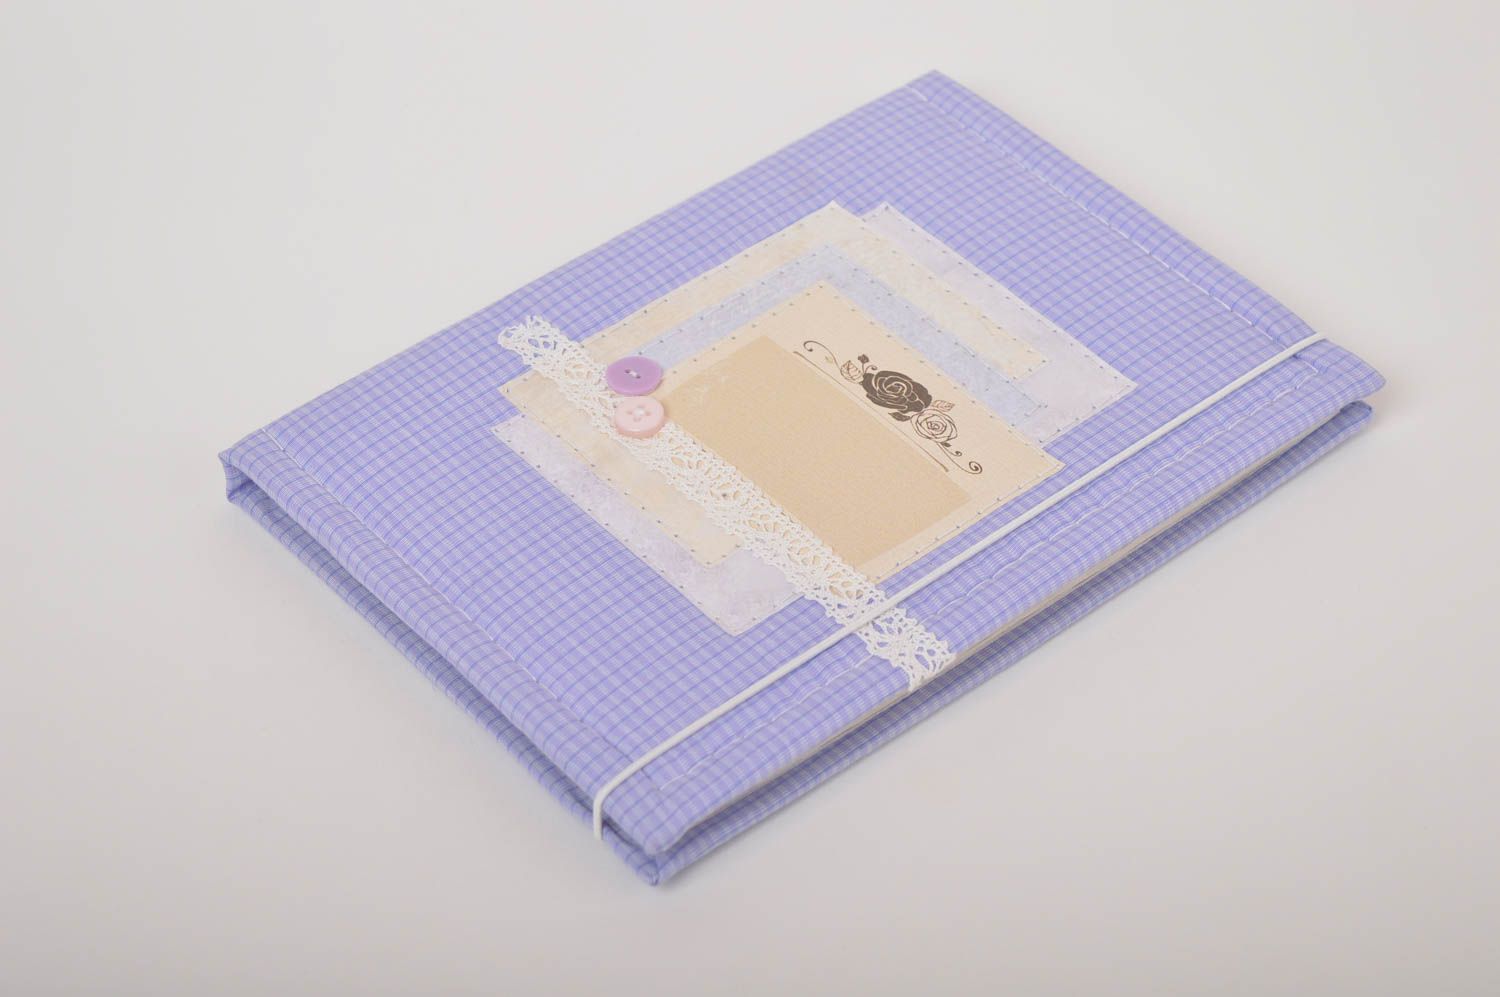 Handmade notebook gift ideas designer notebook for girls unusual gift for her photo 2